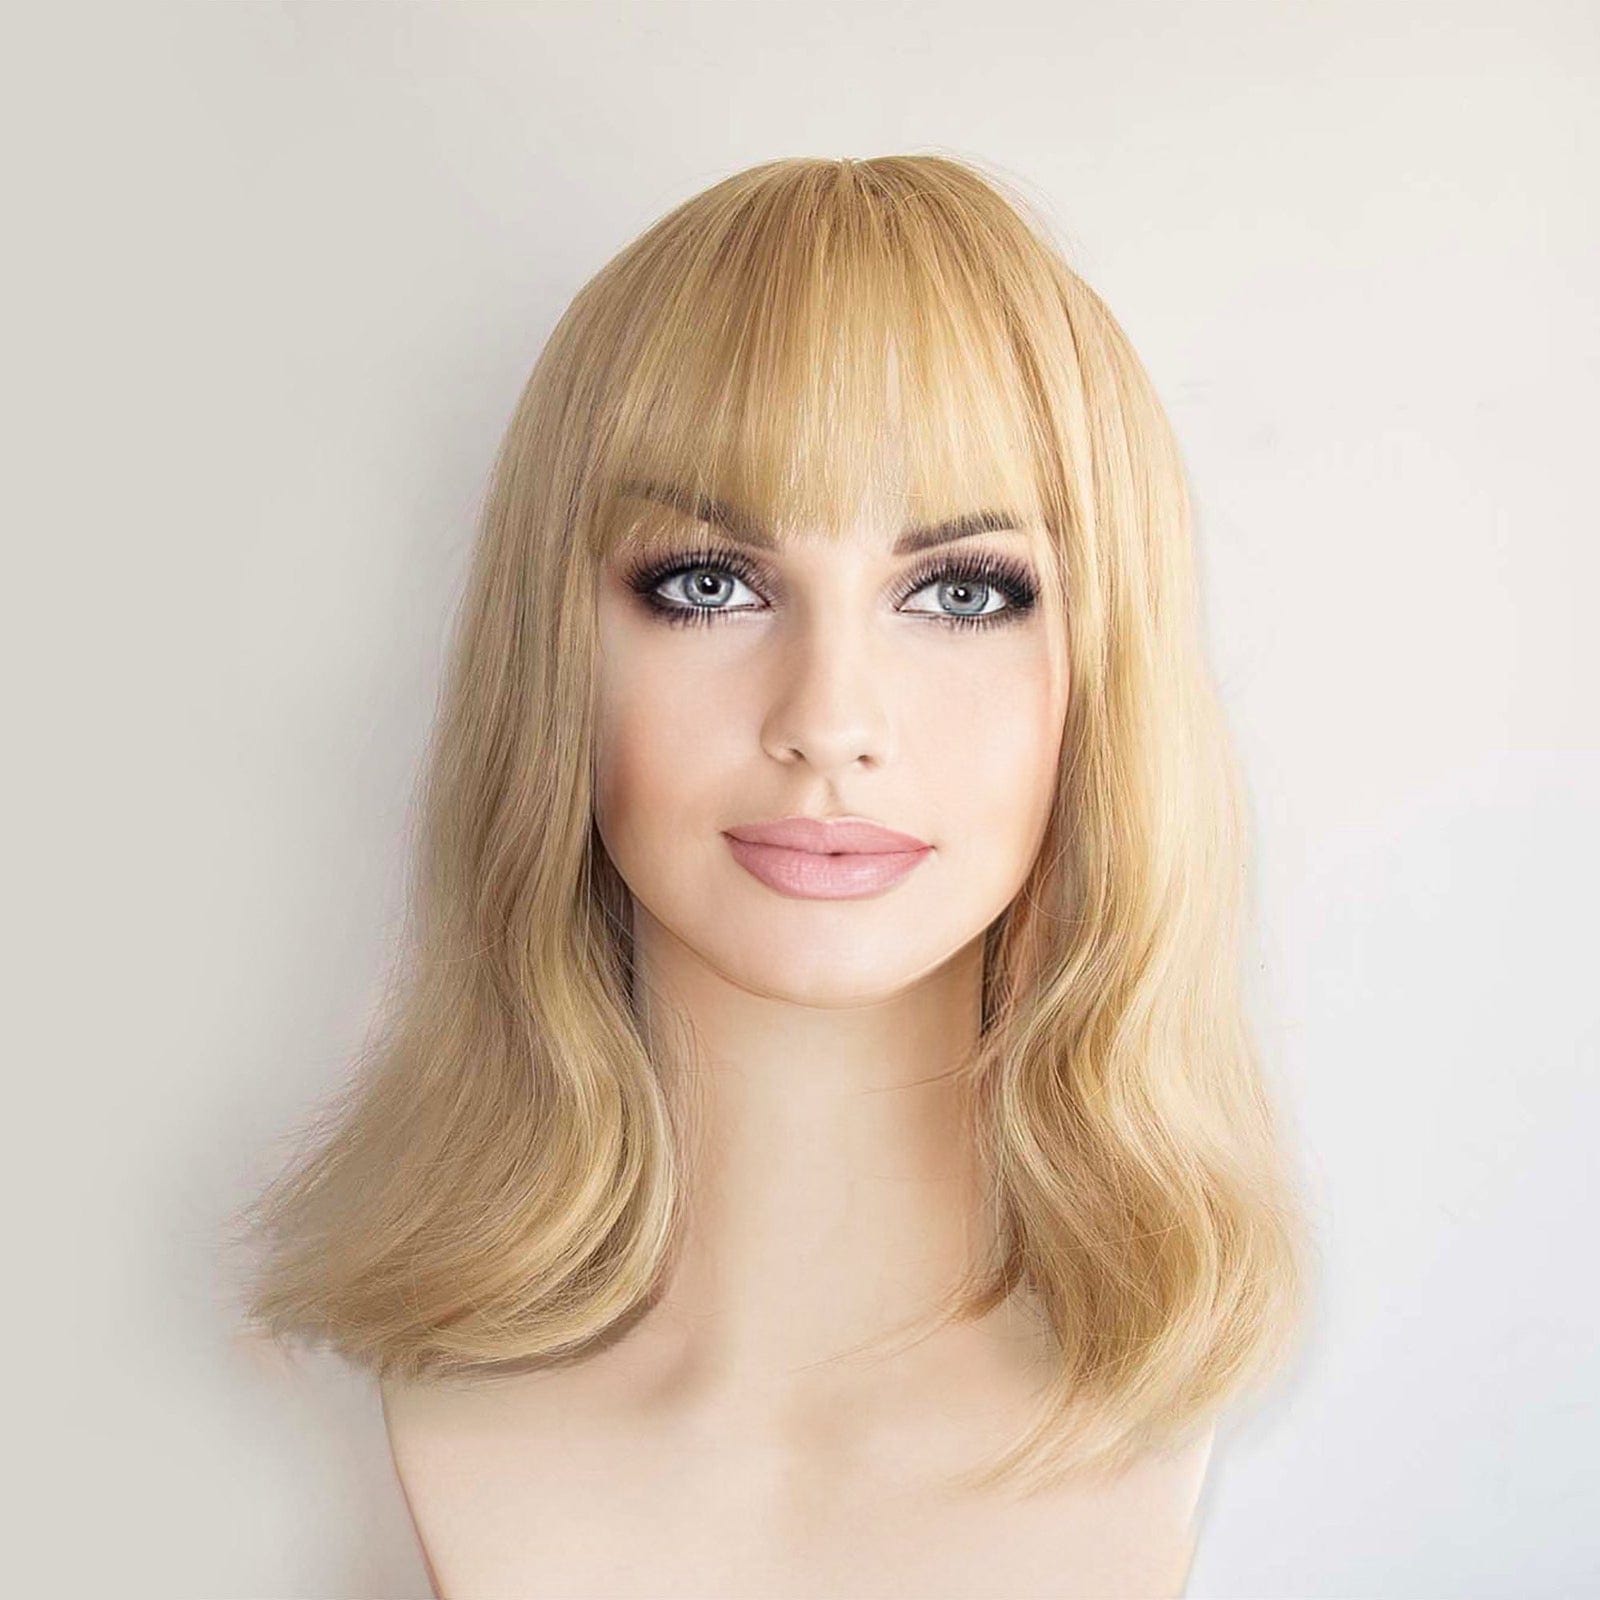 nevermindyrhead Women Golden Blonde Long Wavy Fringe Bangs Wig